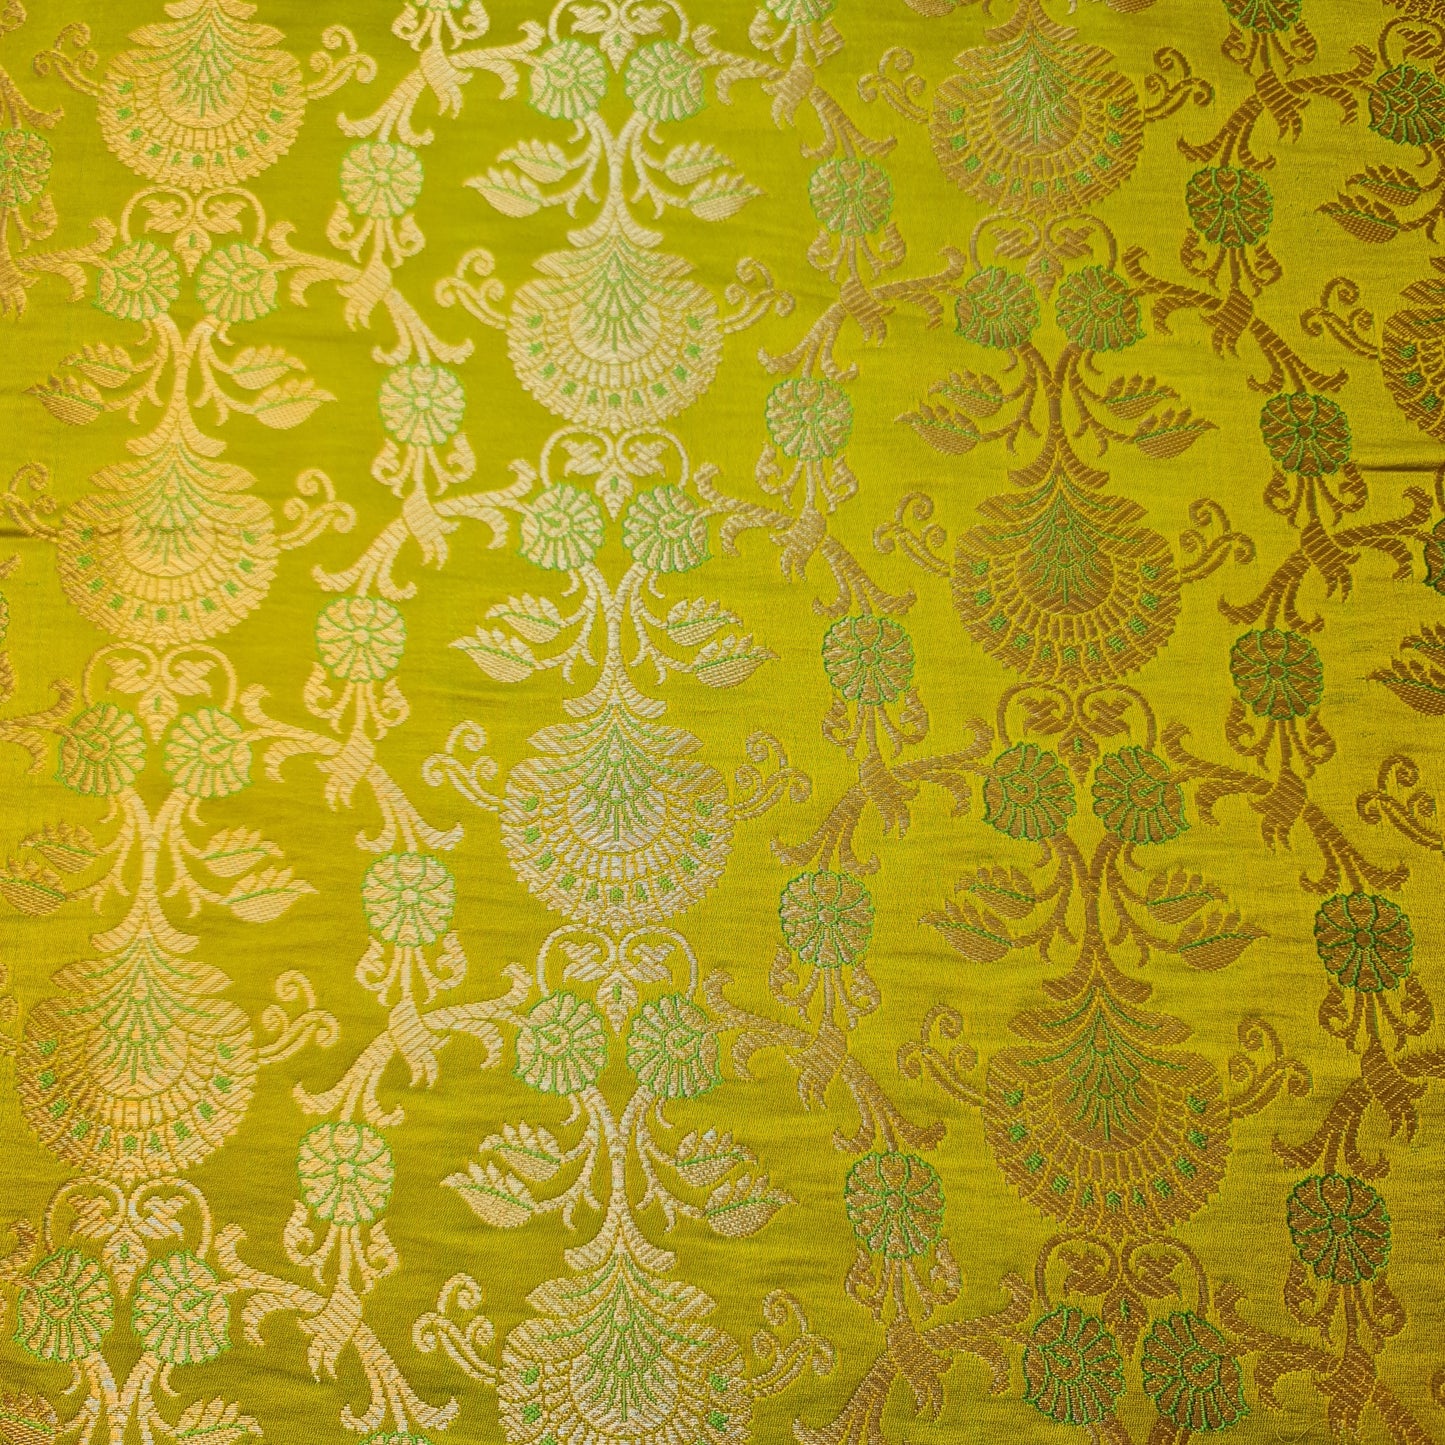 Ornamental Christmas (Lime) Floral Gold Metallic Print Indian Banarasi Brocade Fabric